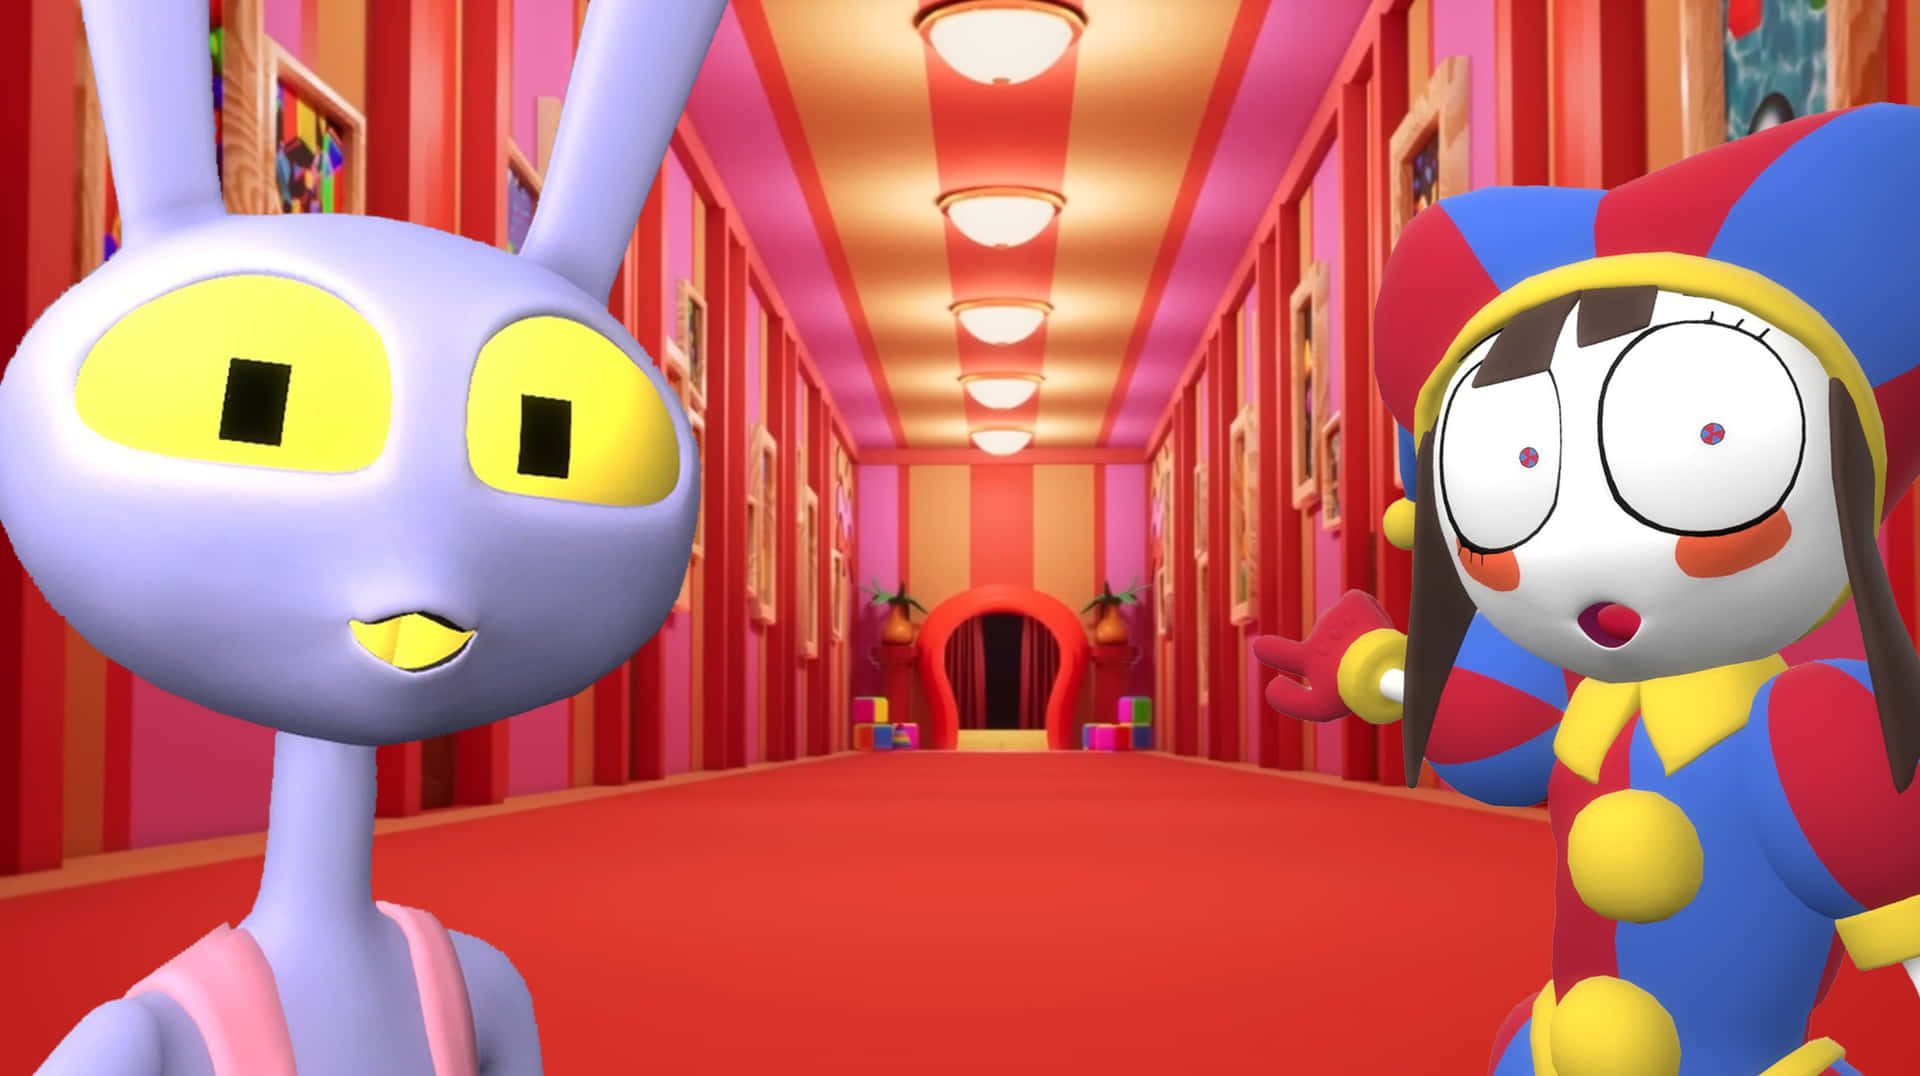 Animated Rabbitand Friend Hallway Encounter.jpg Wallpaper